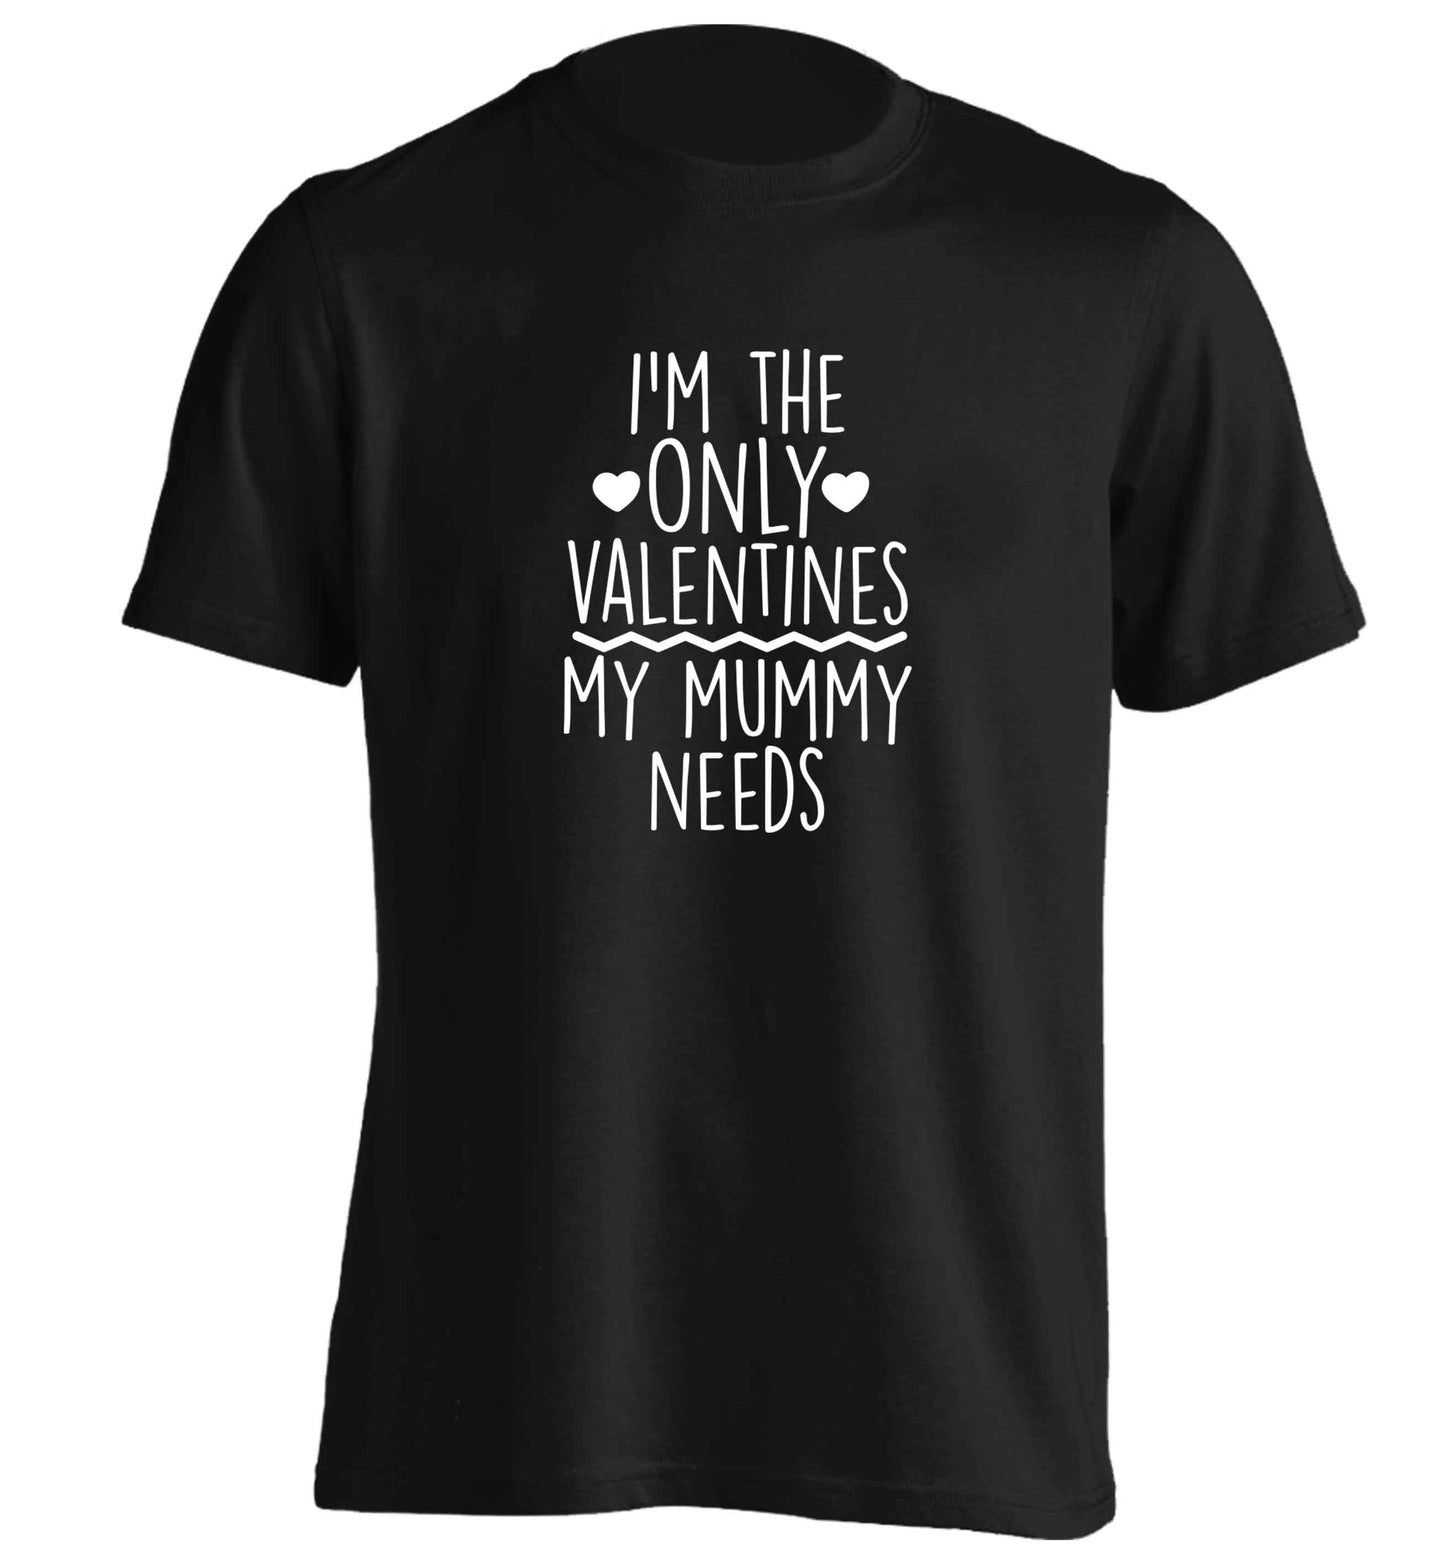 I'm the only valentines my mummy needs adults unisex black Tshirt 2XL